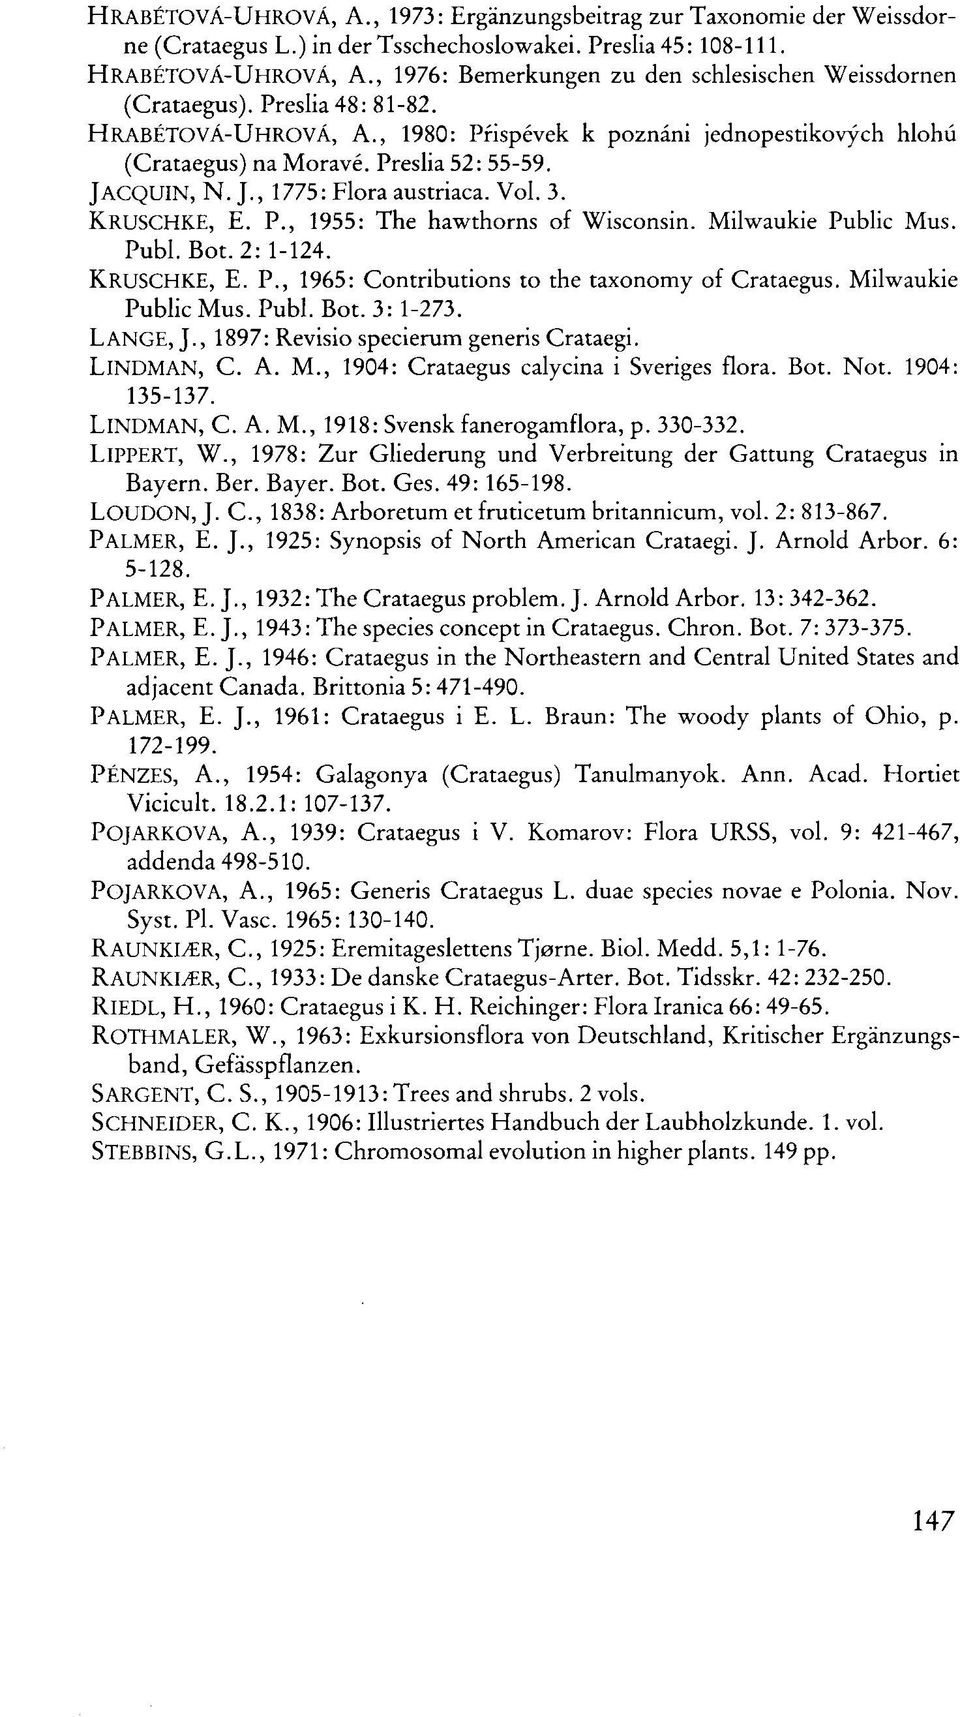 JACQUIN, N. J., 1775: Flora austriaca. Vol. 3. KRUSCHKE, E. P., 1955: The hawthorns of Wisconsin. Milwaukie Public Mus. Publ. Bot. 2: 1-124. KRUSCHKE, E. P., 1965: Contributions to the taxonomy of Crataegus.